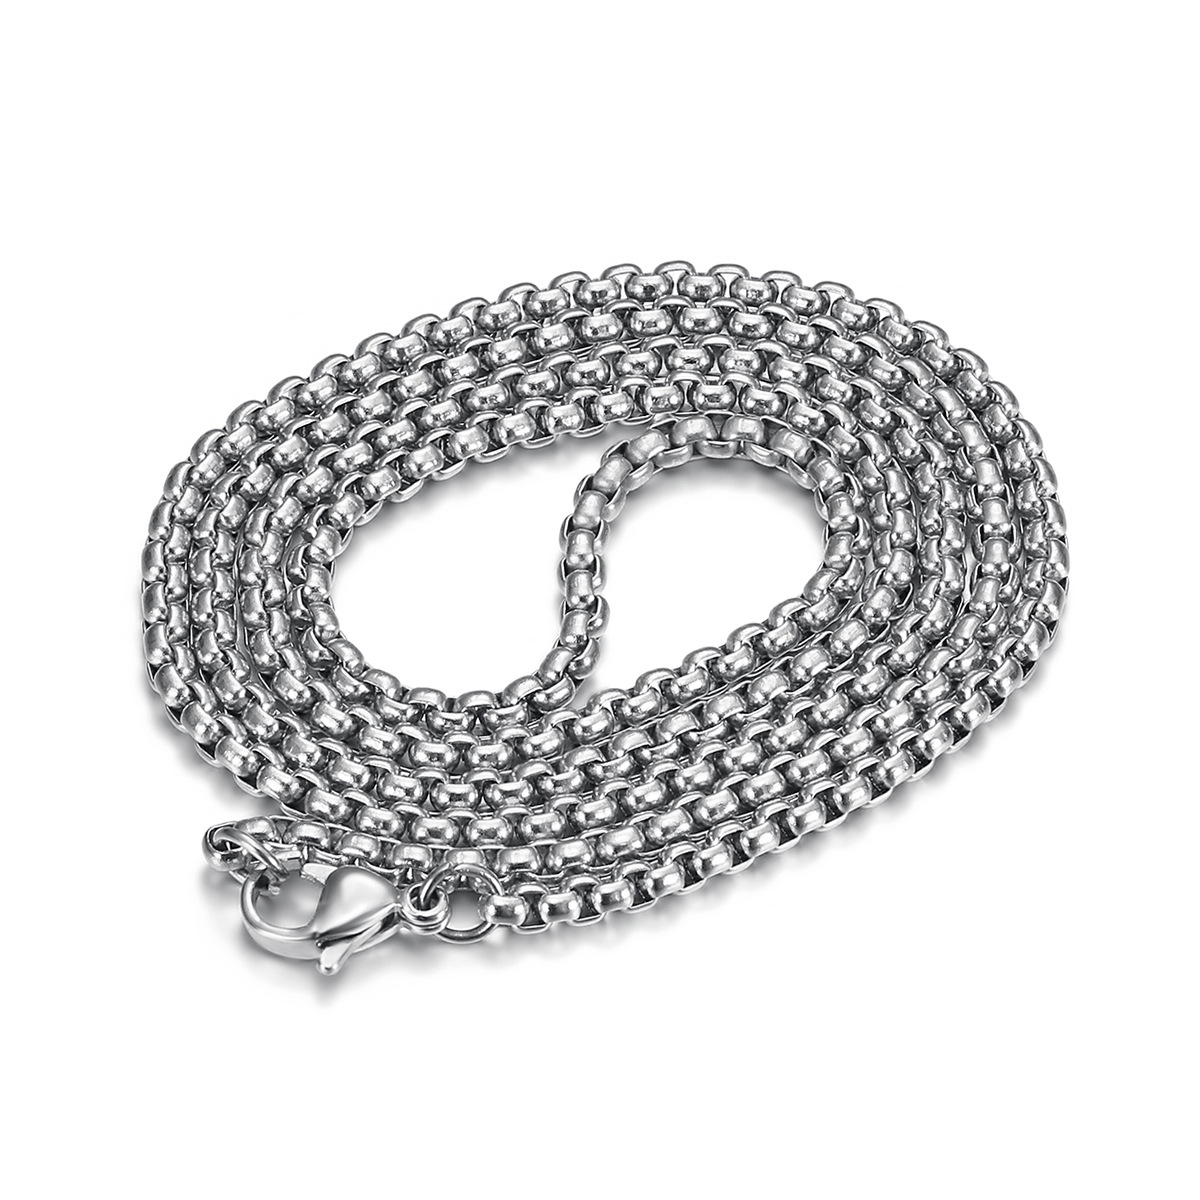 D necklace chain 600mm